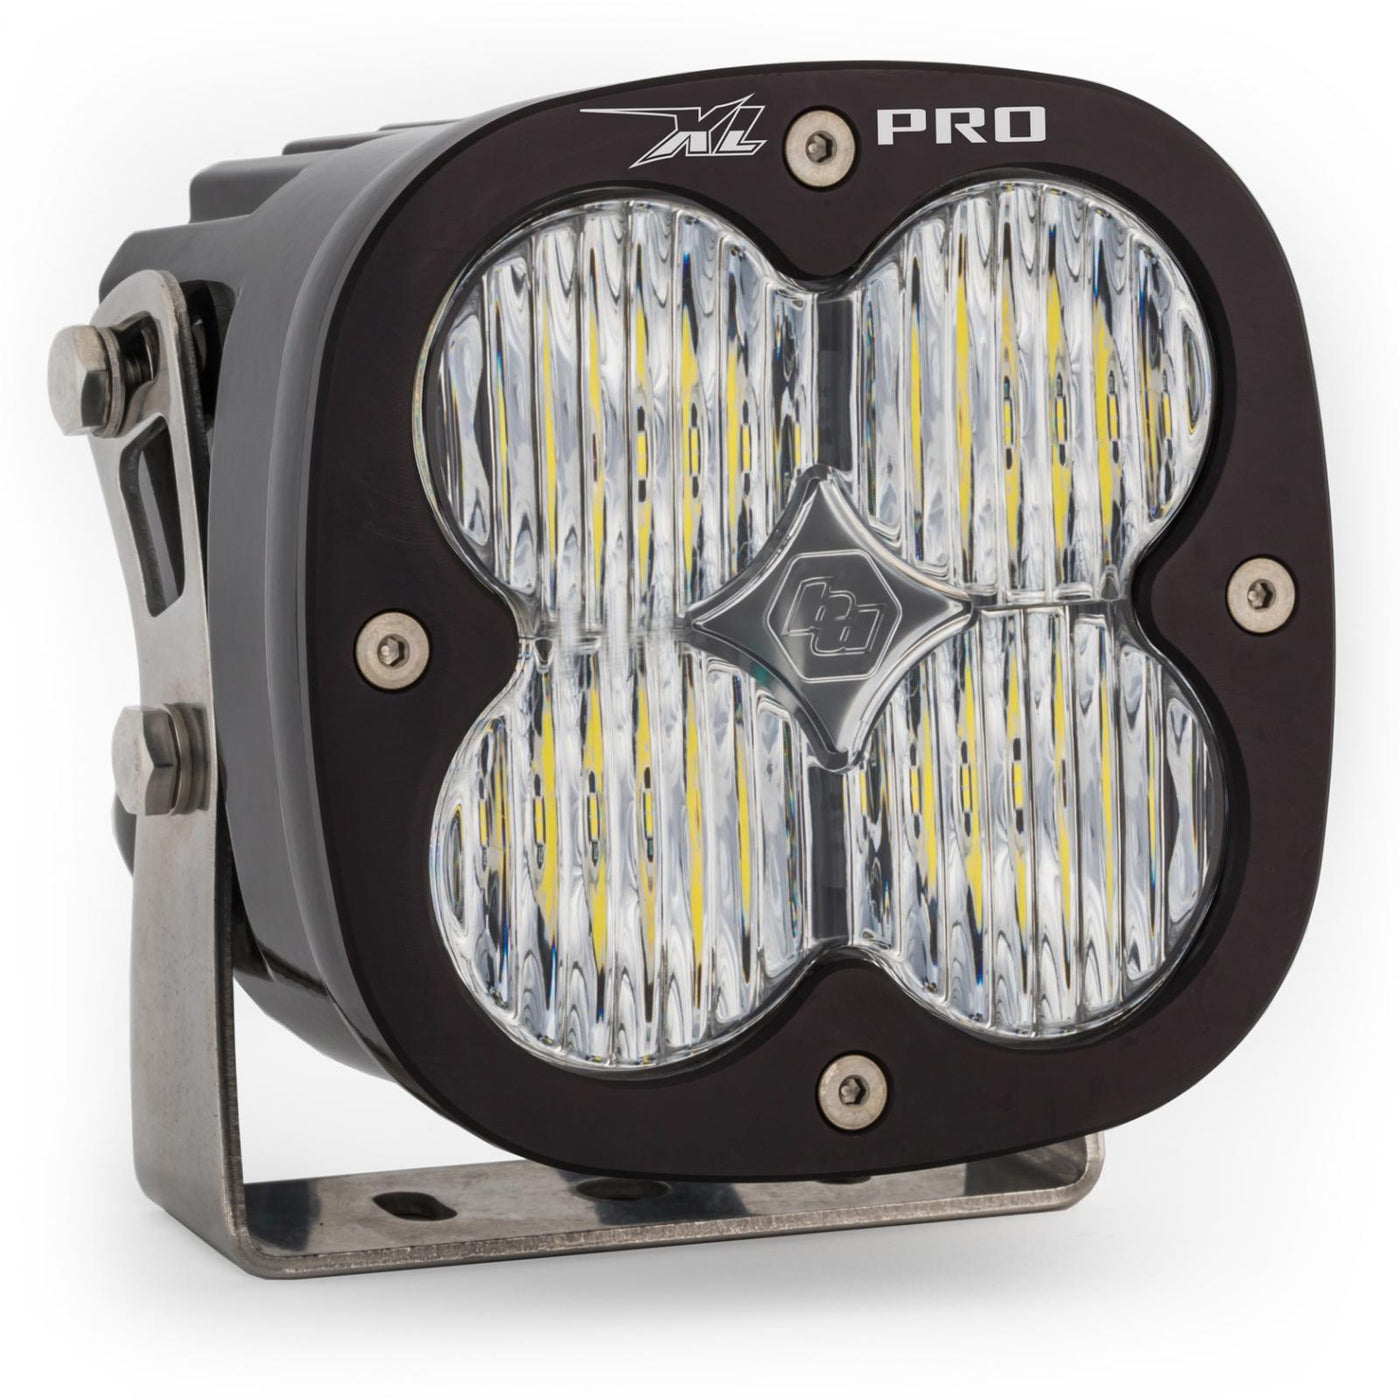 Baja Designs 500005 LED Light Pods Clear Lens Spot XL Pro Wide Cornering